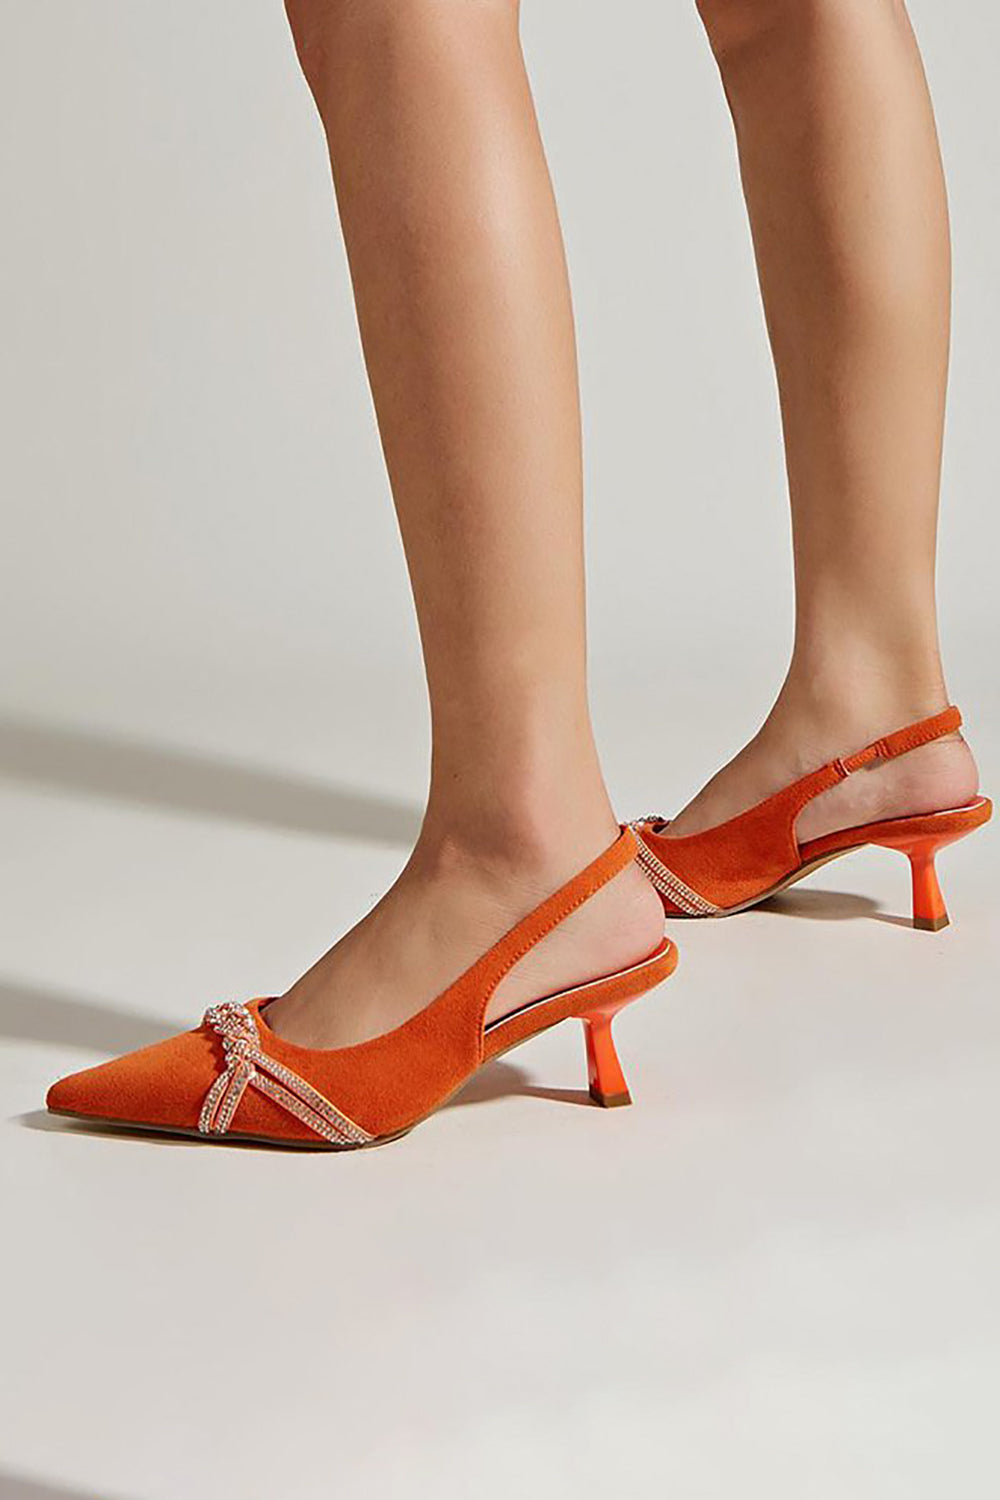 Orange Pointed Toe Rhinestones Kitten Heels Sandals